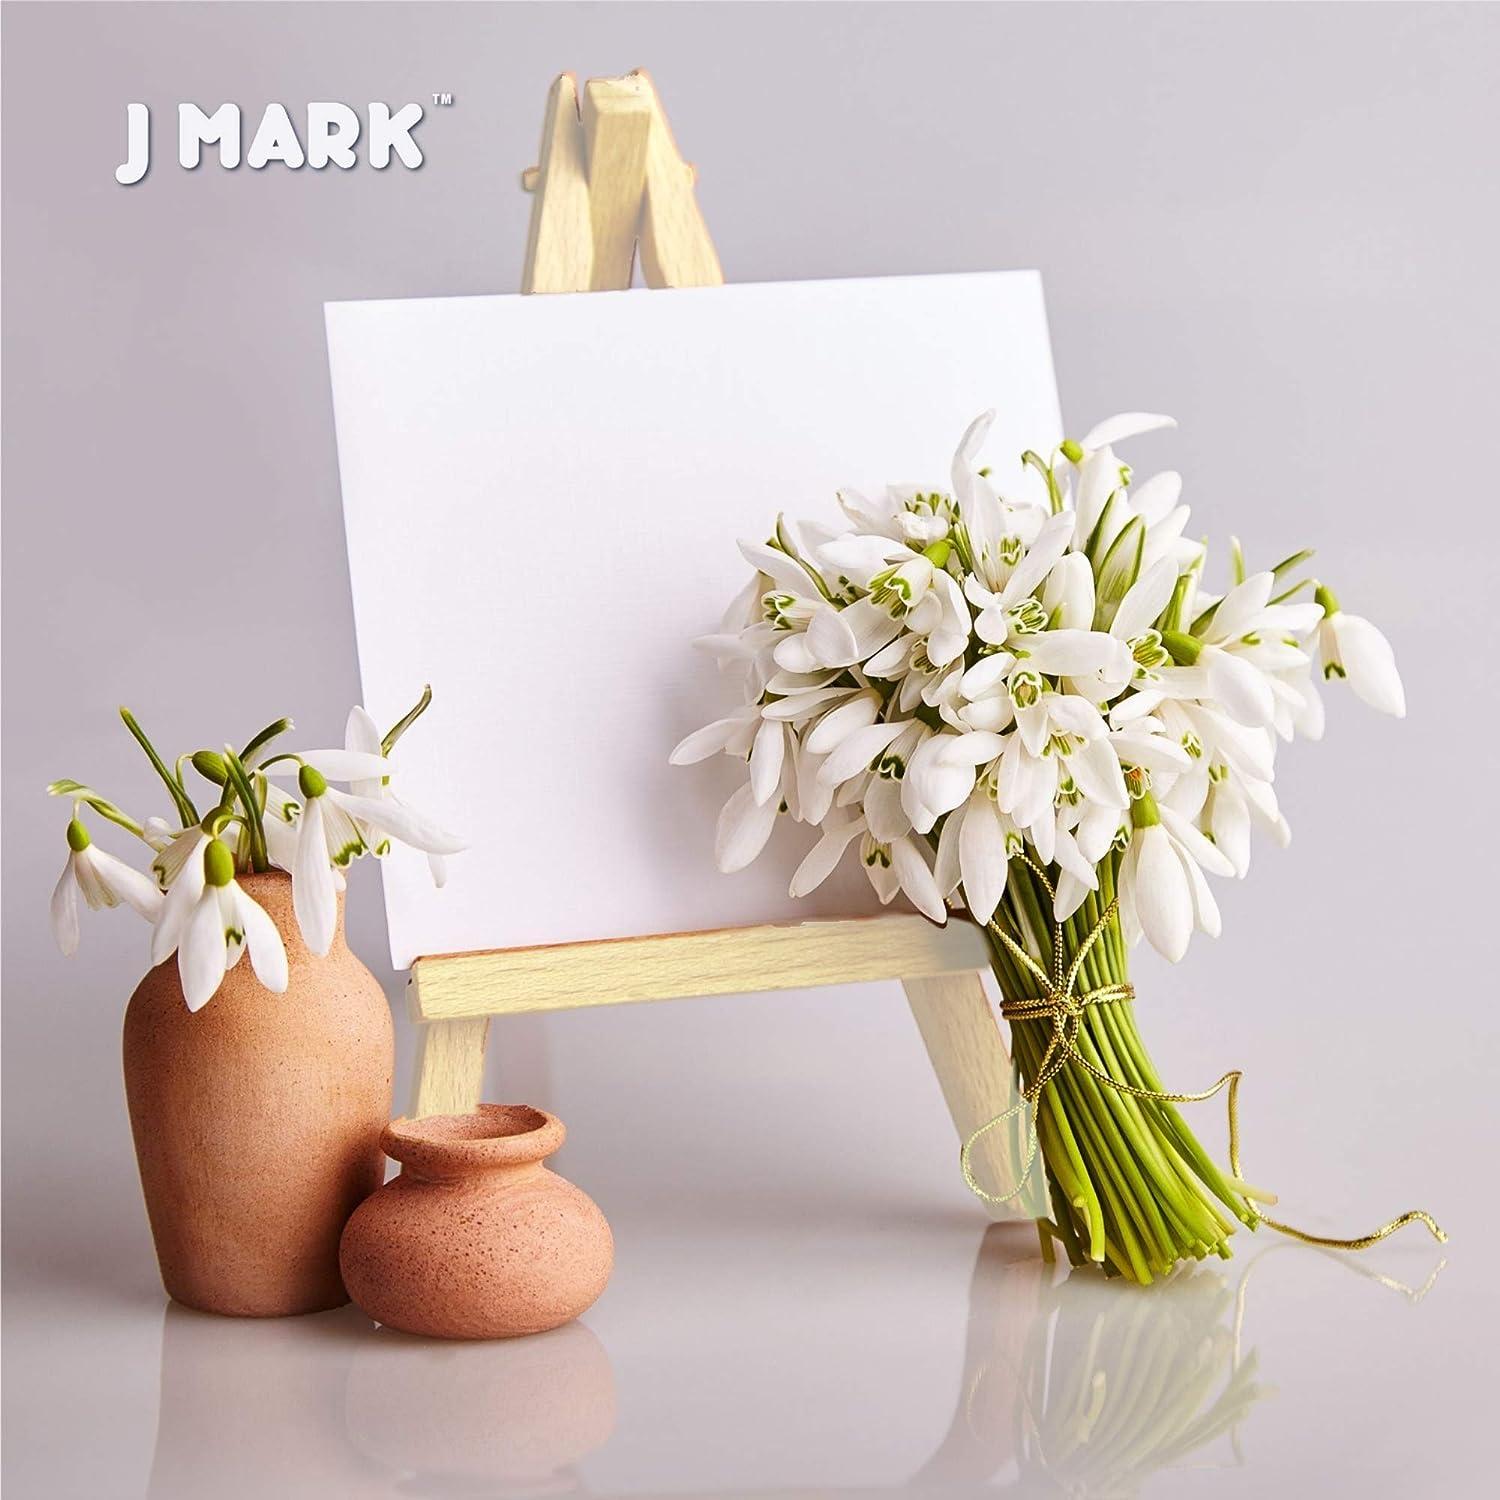 J Mark j mark kids painting kit - piece acrylic painting supplies